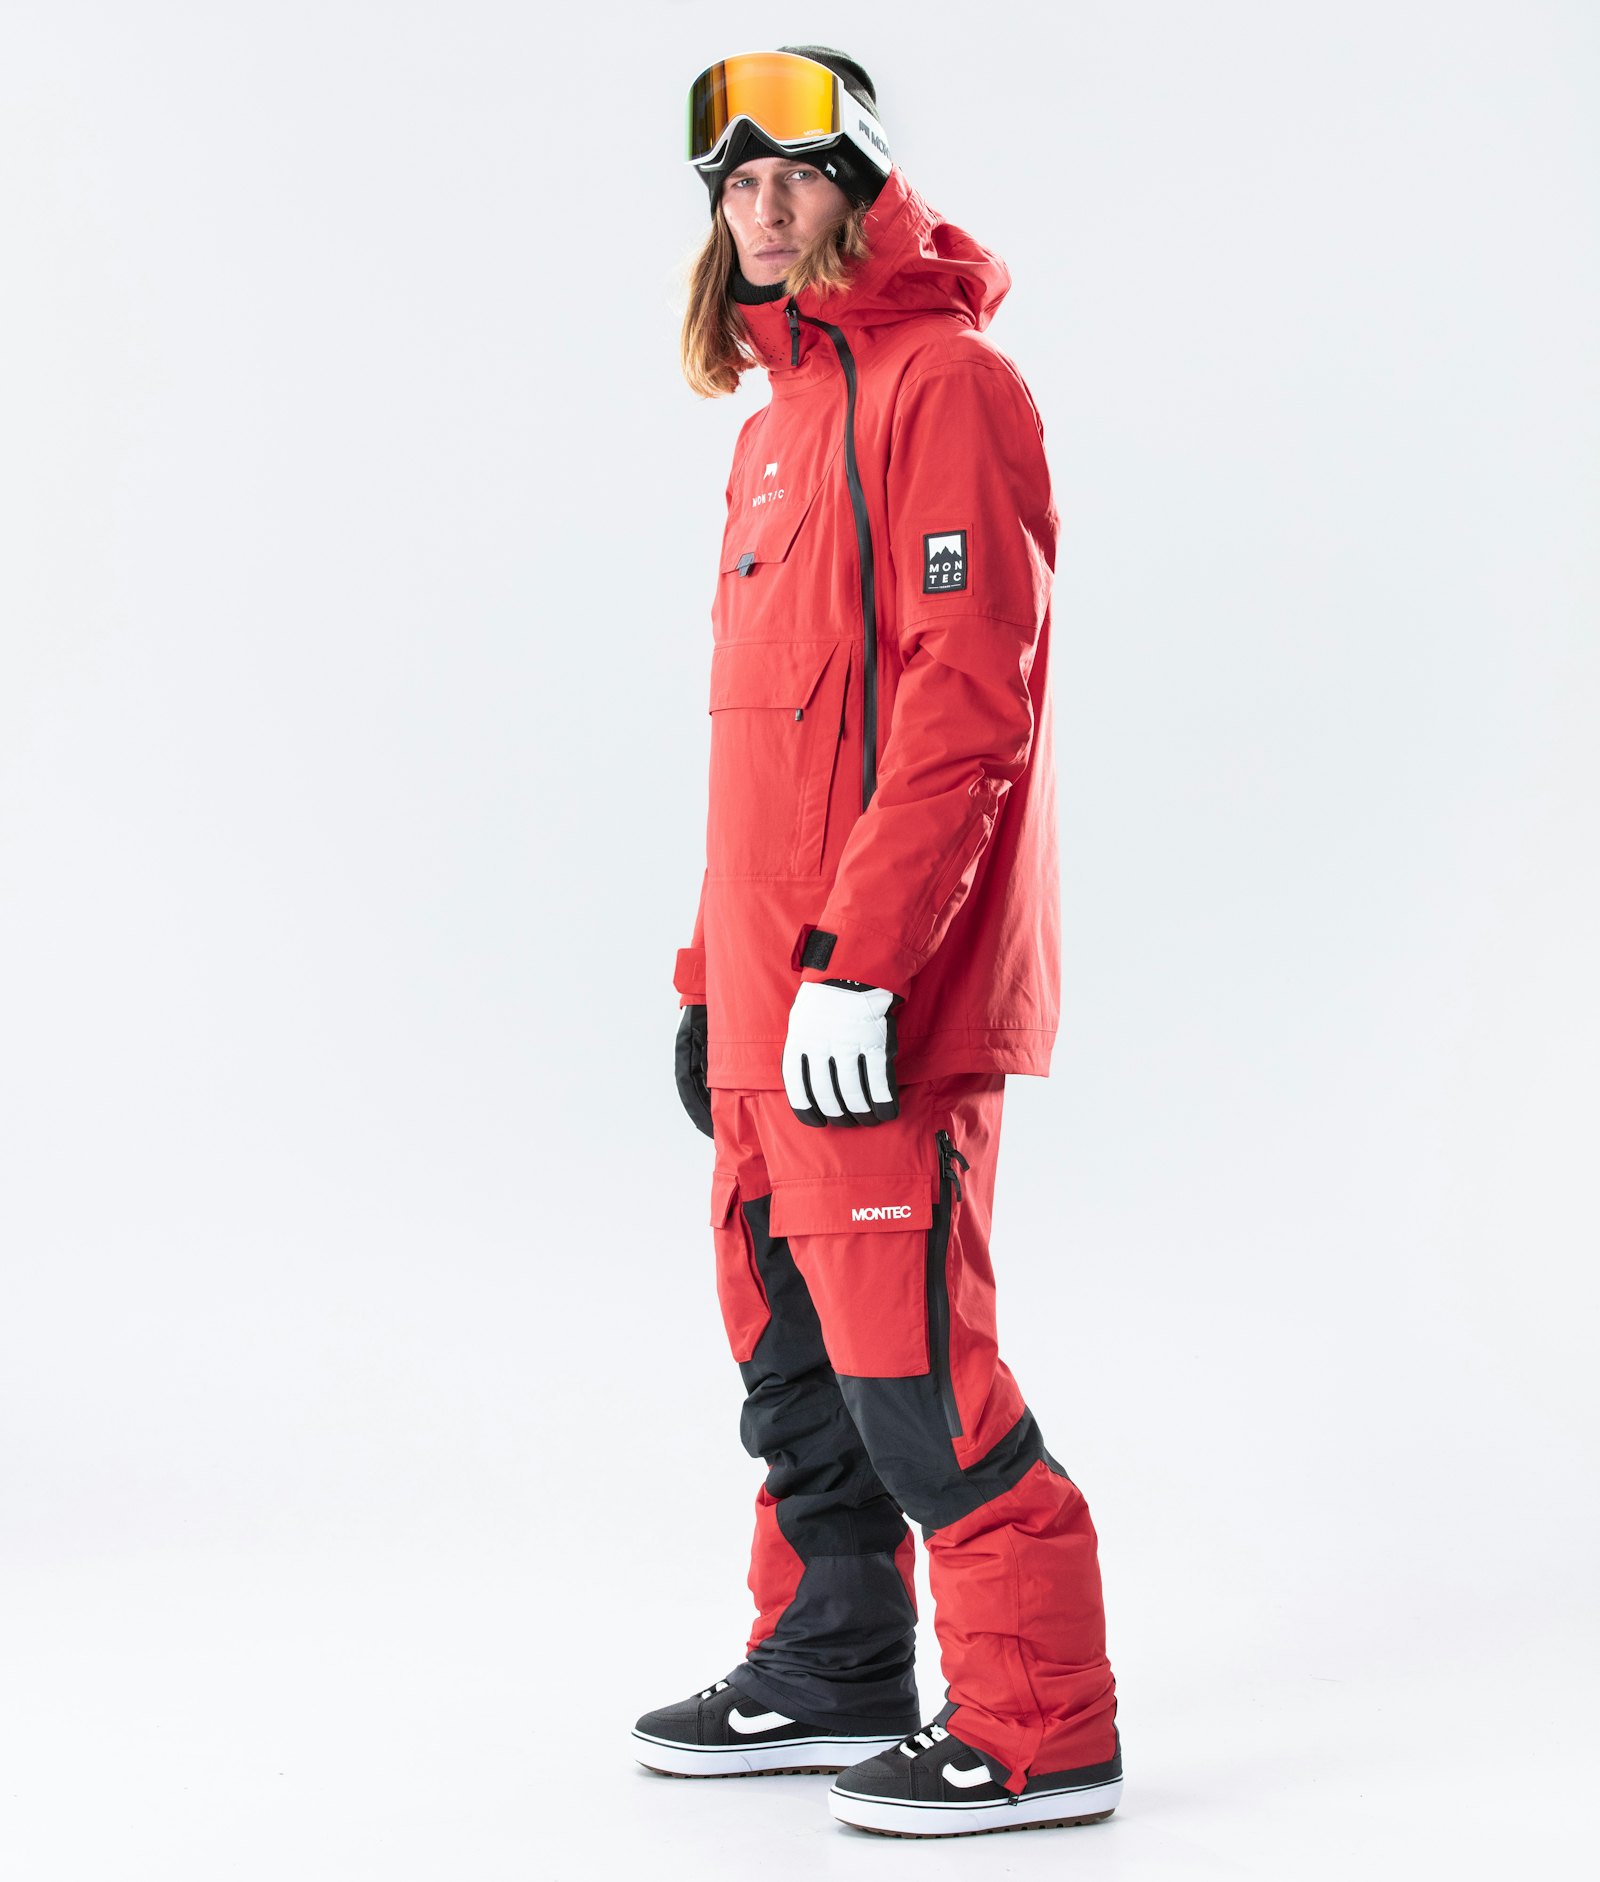 Doom 2020 Veste Snowboard Homme Red